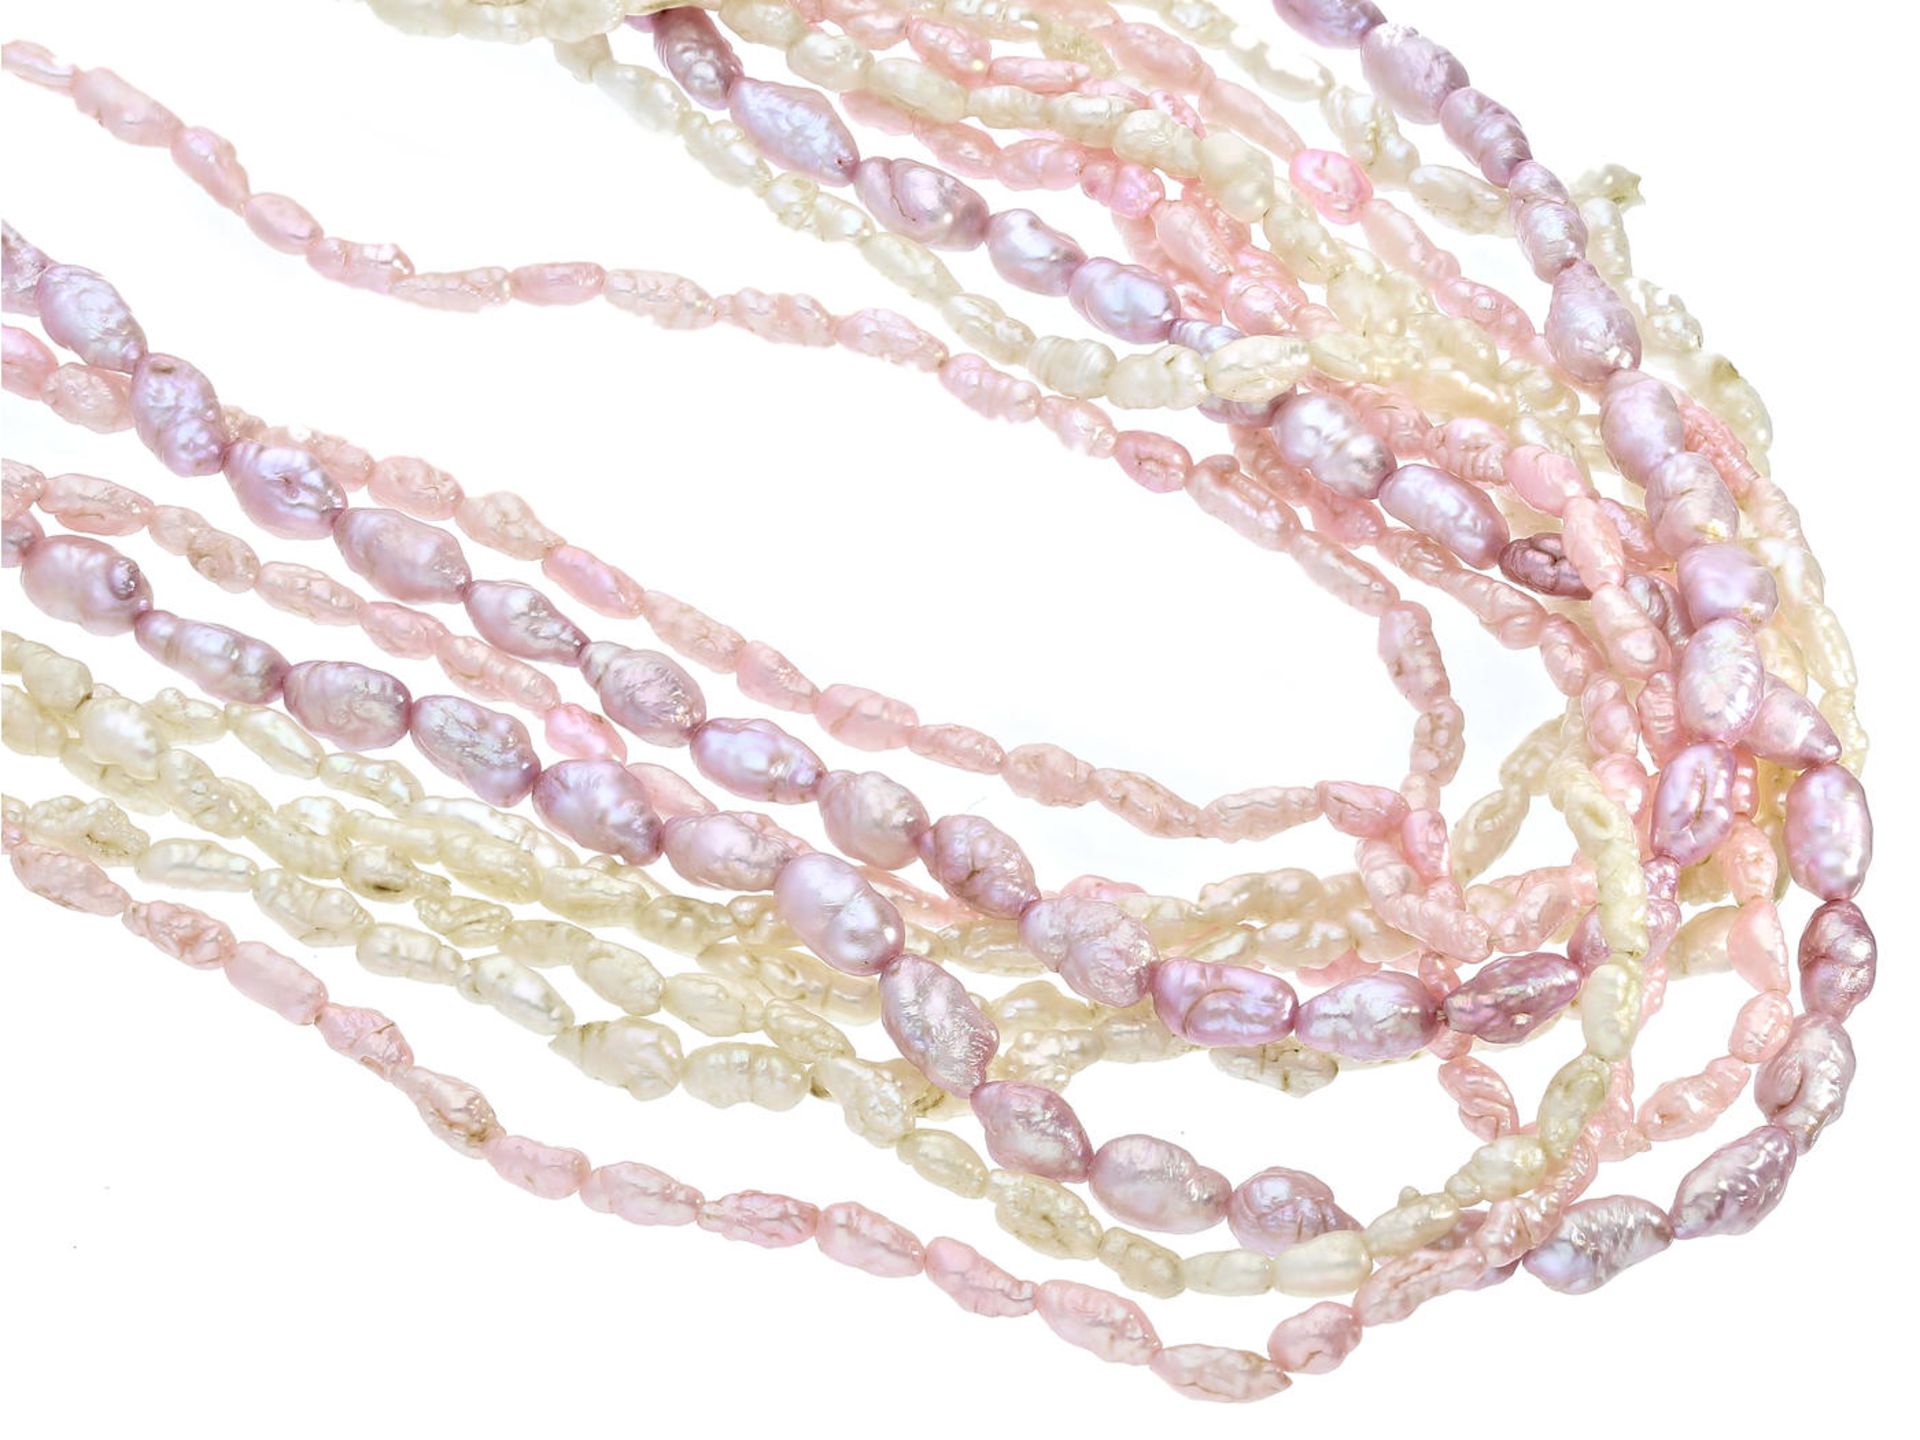 Kette: Süßwasser-Perlenkette mit hochwertiger Brillantschließe, 18K Bicolor Ca. 47cm lang, barocke